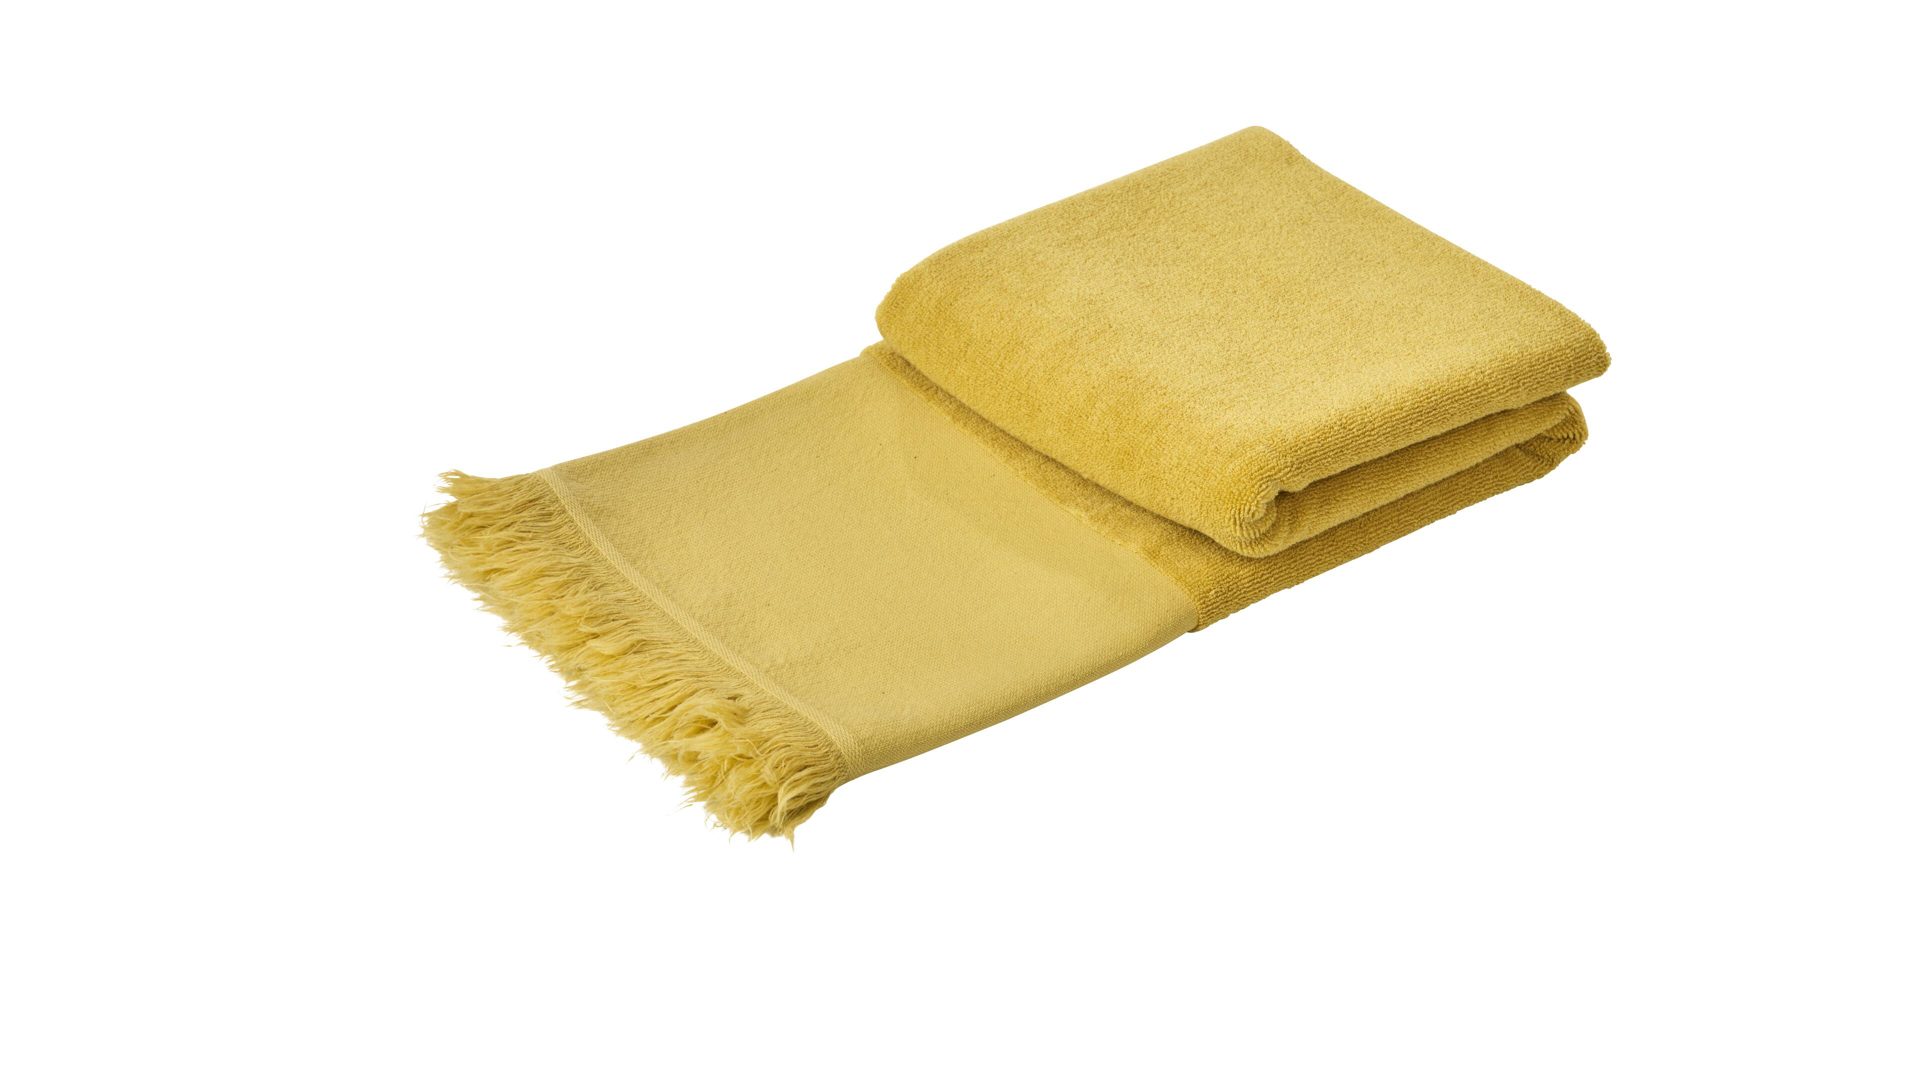 Hamamtuch Done® be different aus Stoff in Gelb DONE® Hamamtuch Caprice goldfarbene Baumwolle – ca. 95 x 180 cm